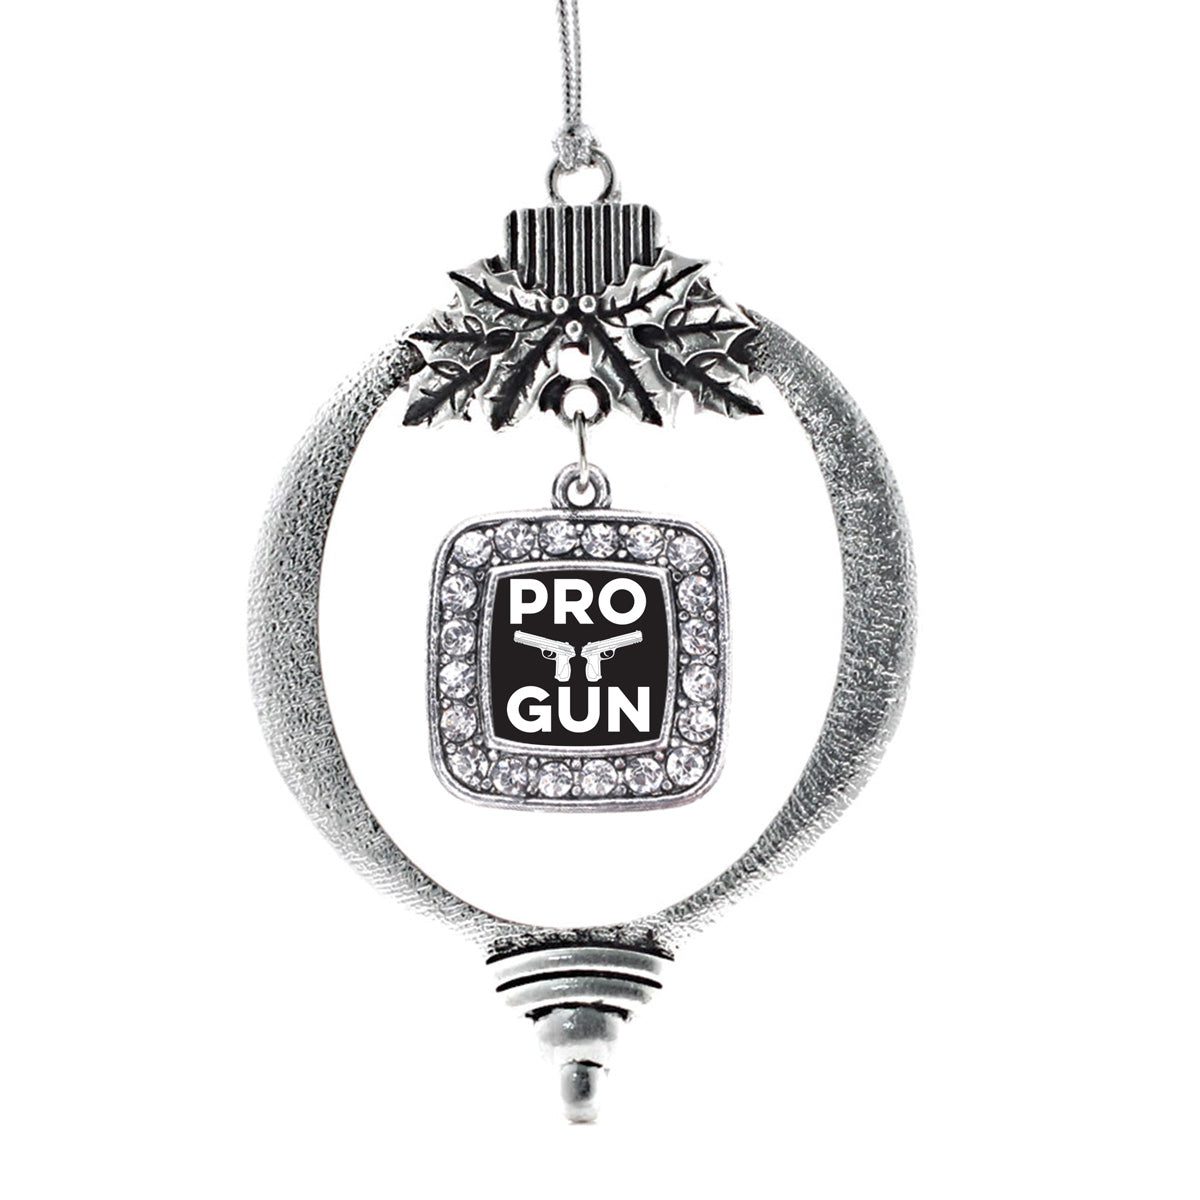 Pro Gun Square Charm Christmas / Holiday Ornament